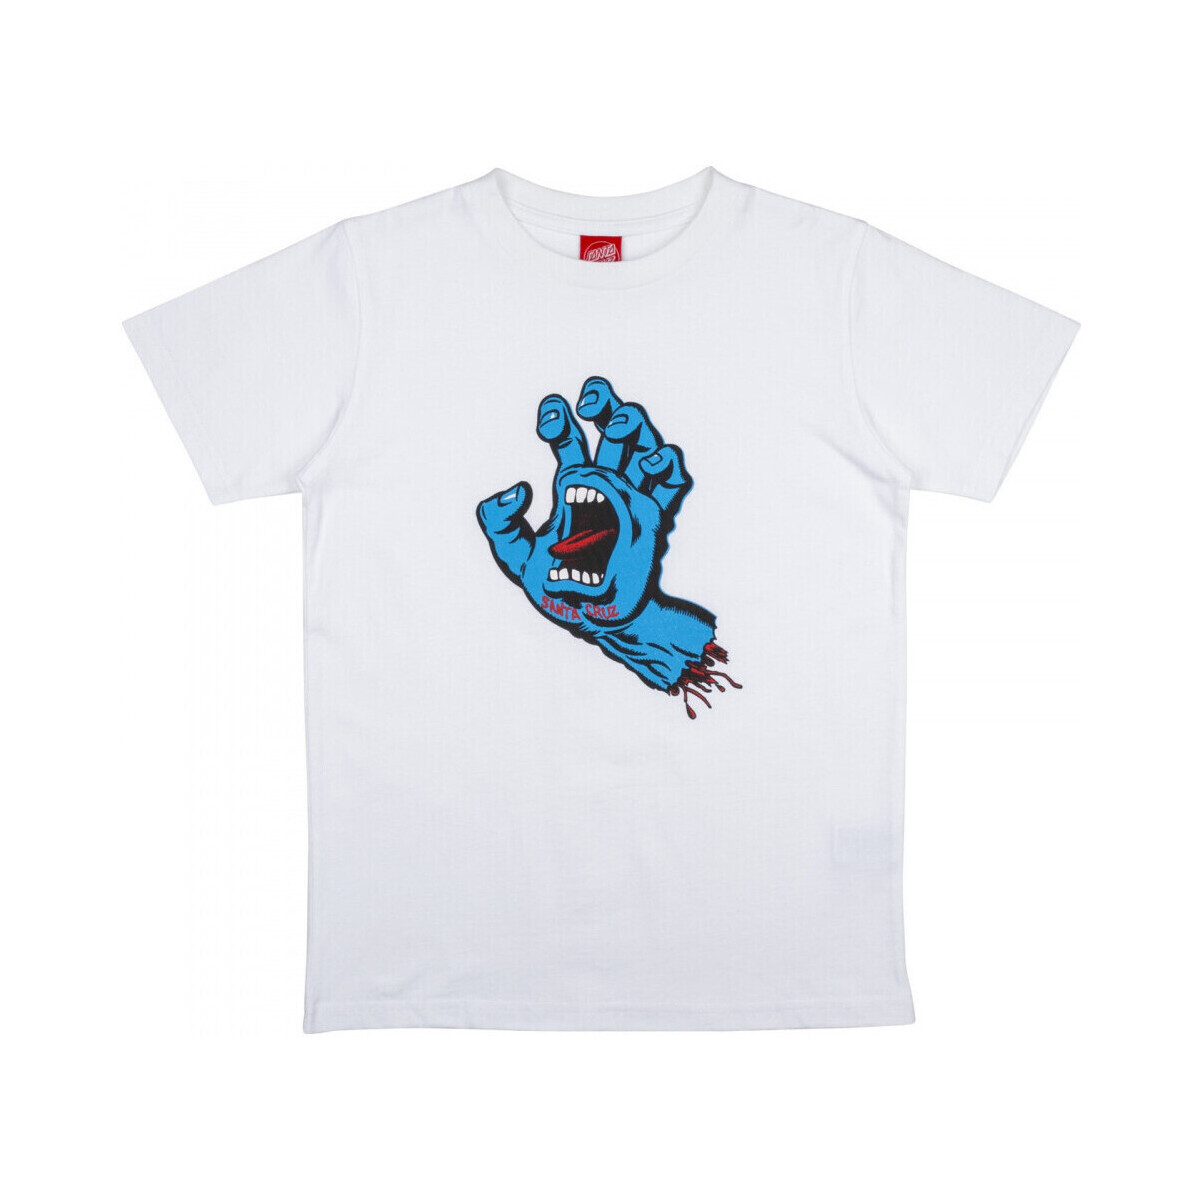 Odjeća Djeca Majice / Polo majice Santa Cruz Youth screaming hand t-shirt Bijela